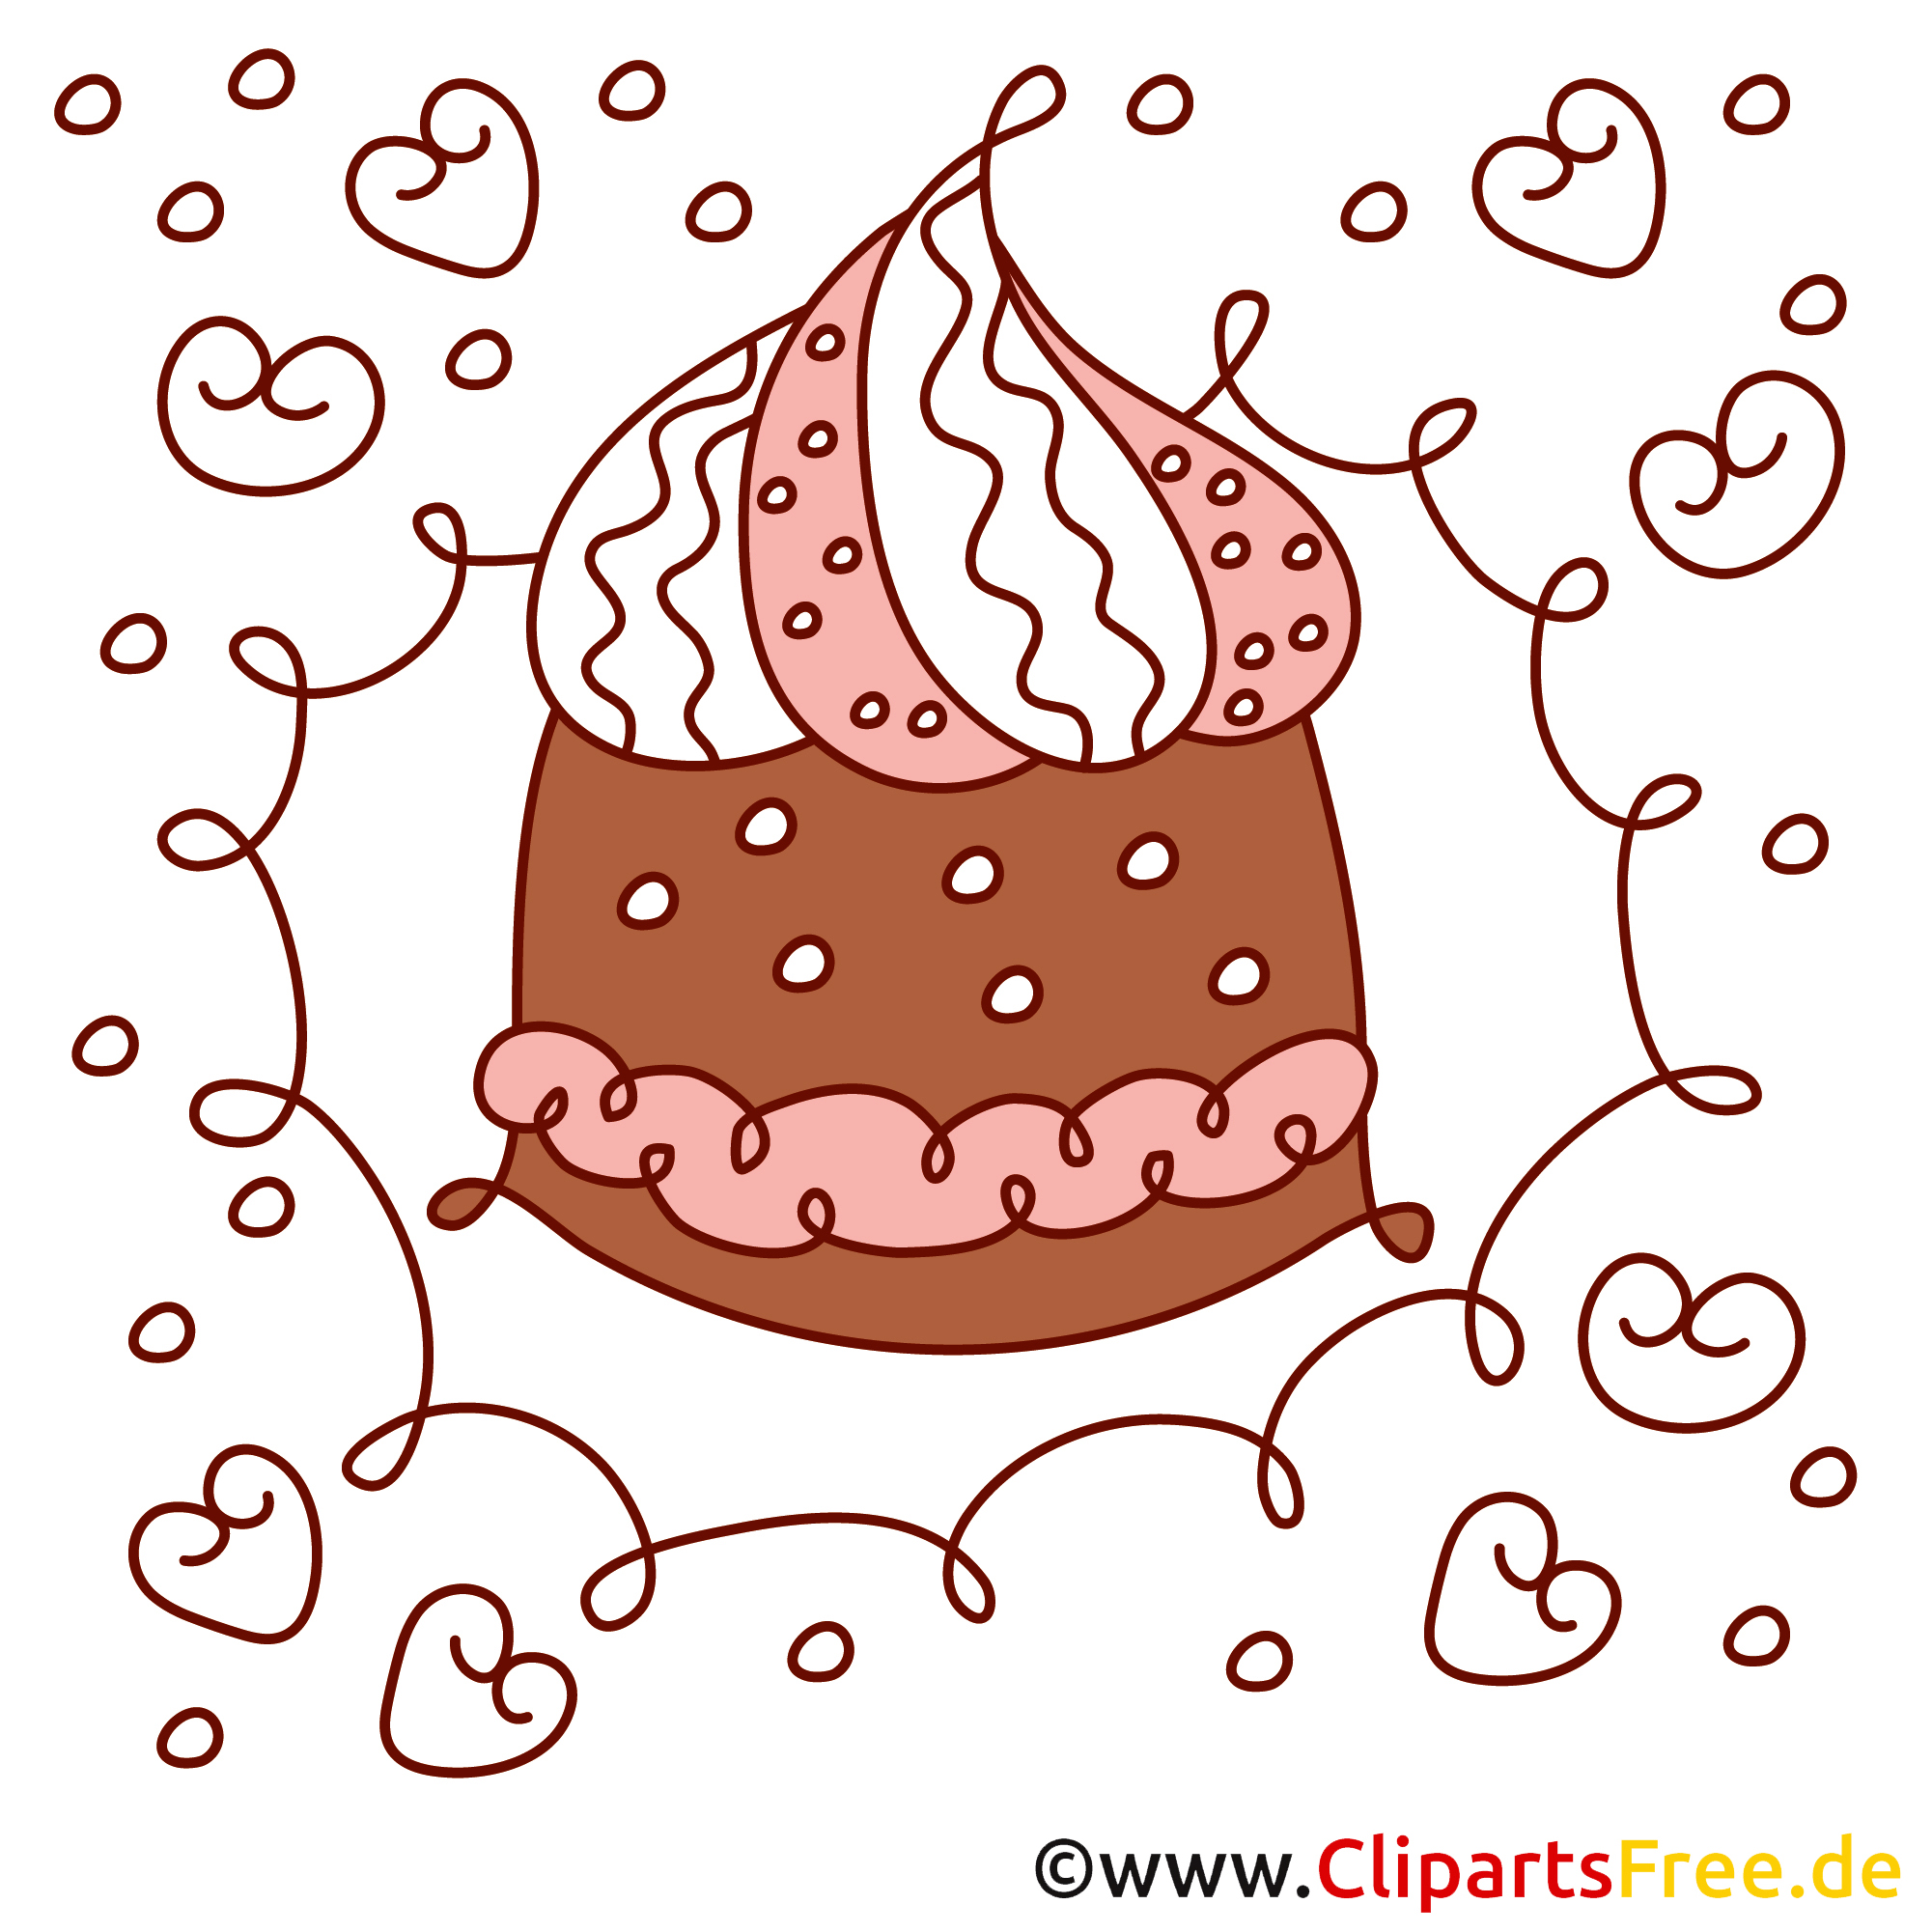 clipart torte geburtstag - photo #4